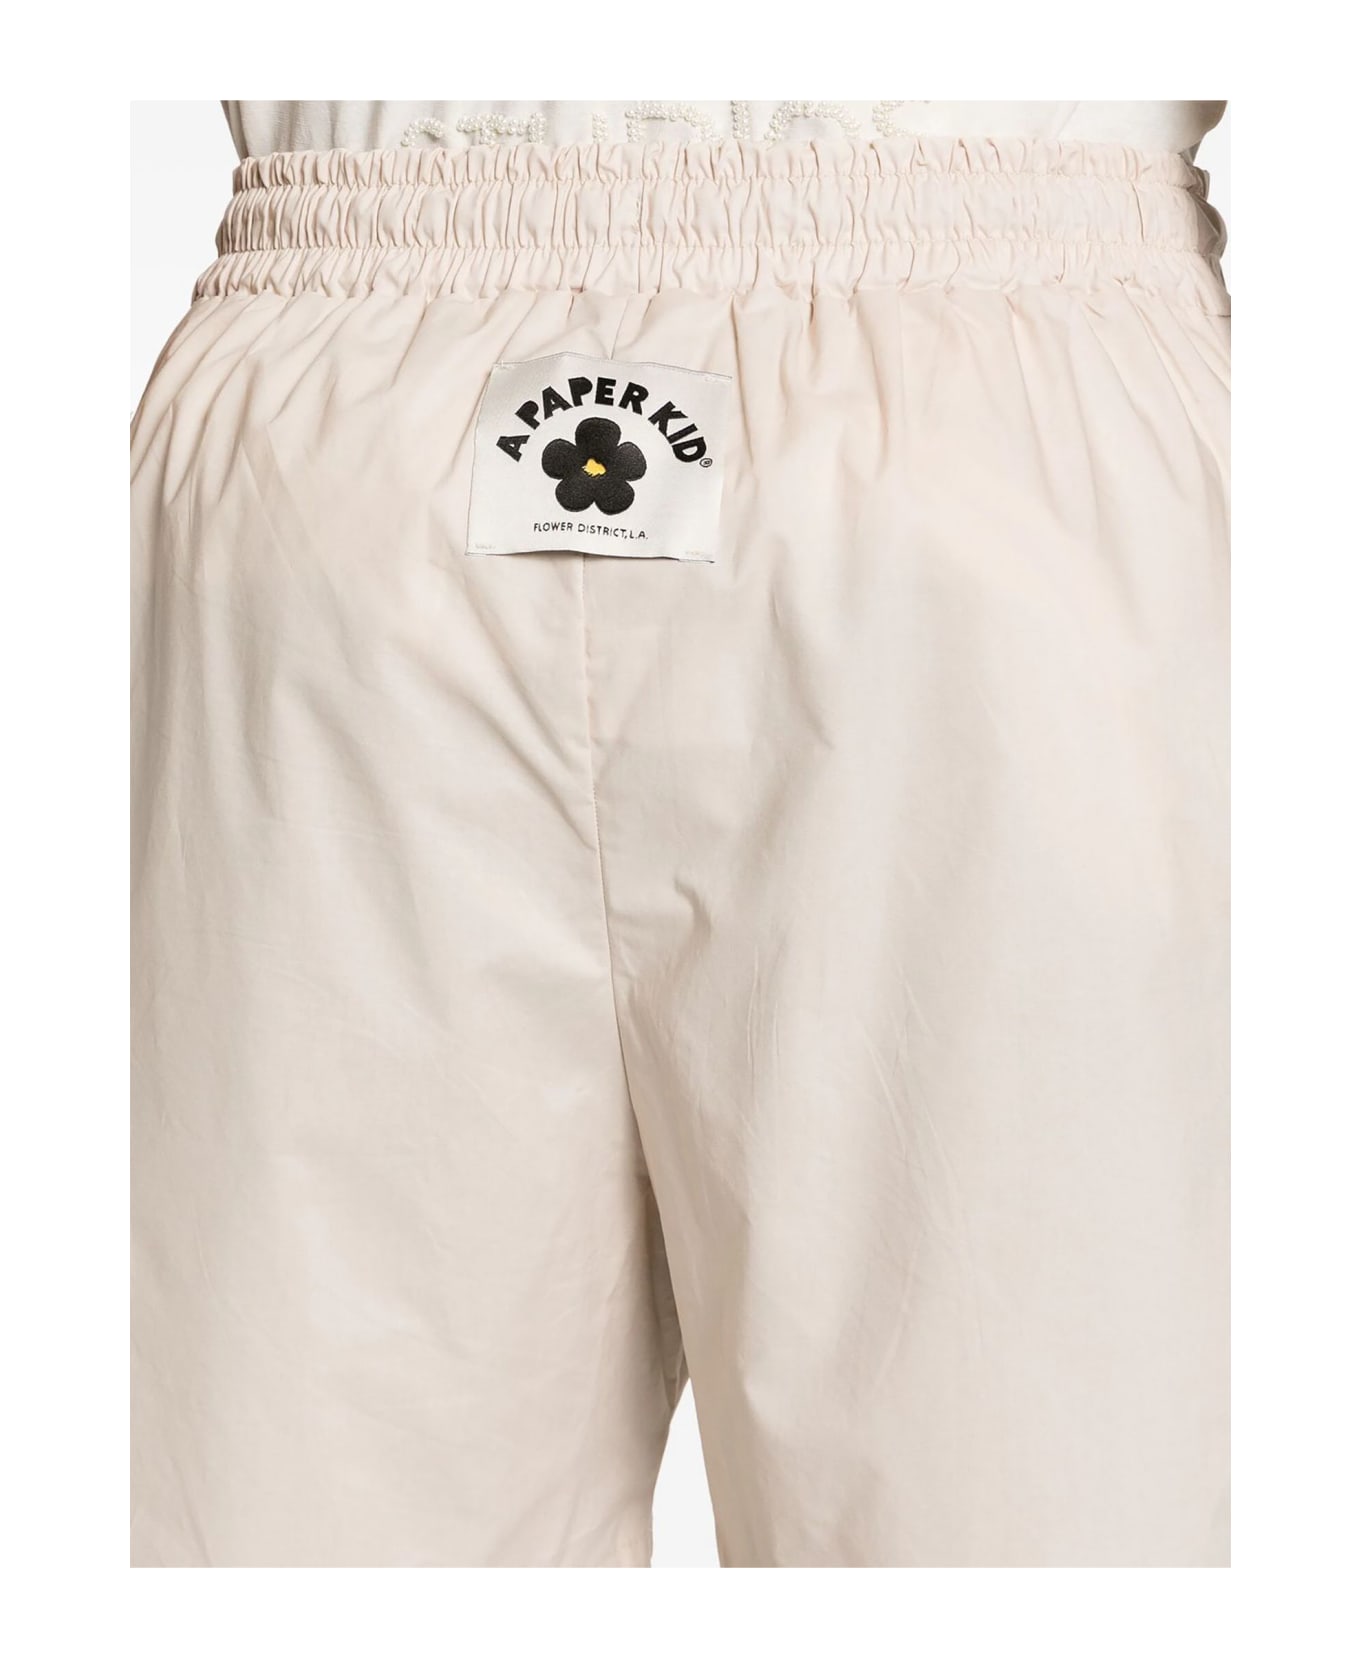 A Paper Kid Sand Beige Cotton Shorts